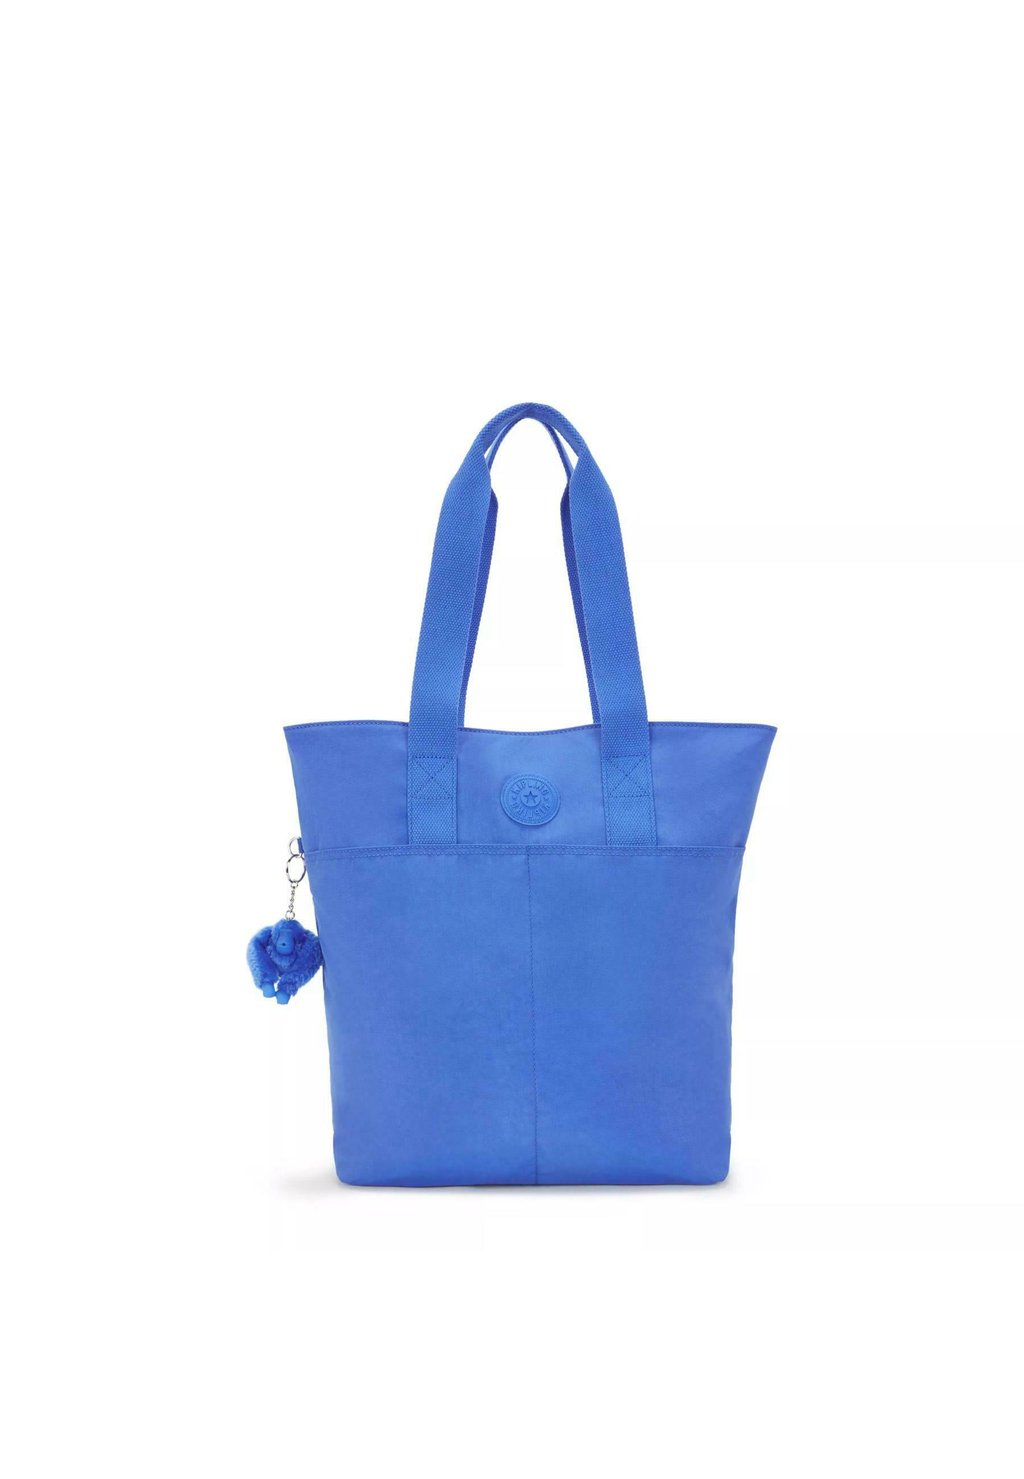 сумка для покупок 38х58см полиэстер синяя Сумка для покупок Kipling, Гавана синяя